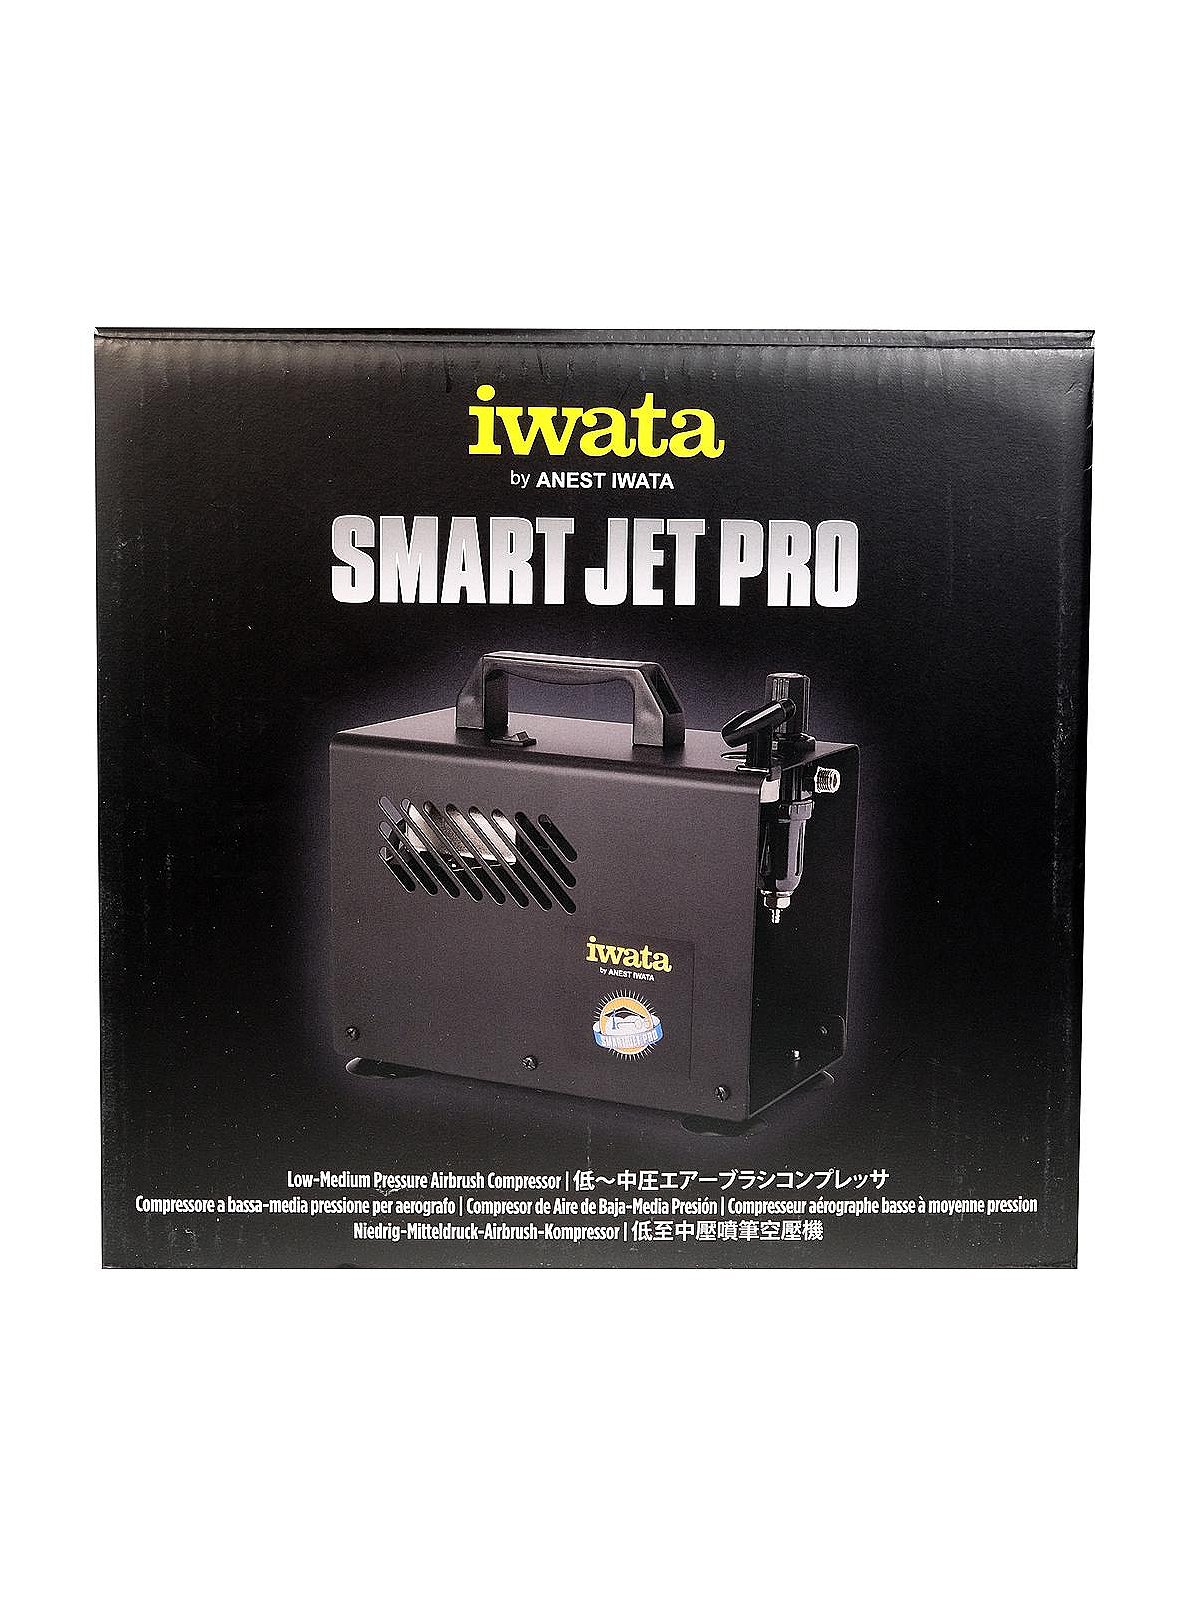 Iwata Smart Jet Pro 110-120V Airbrush Compressor: Anest Iwata